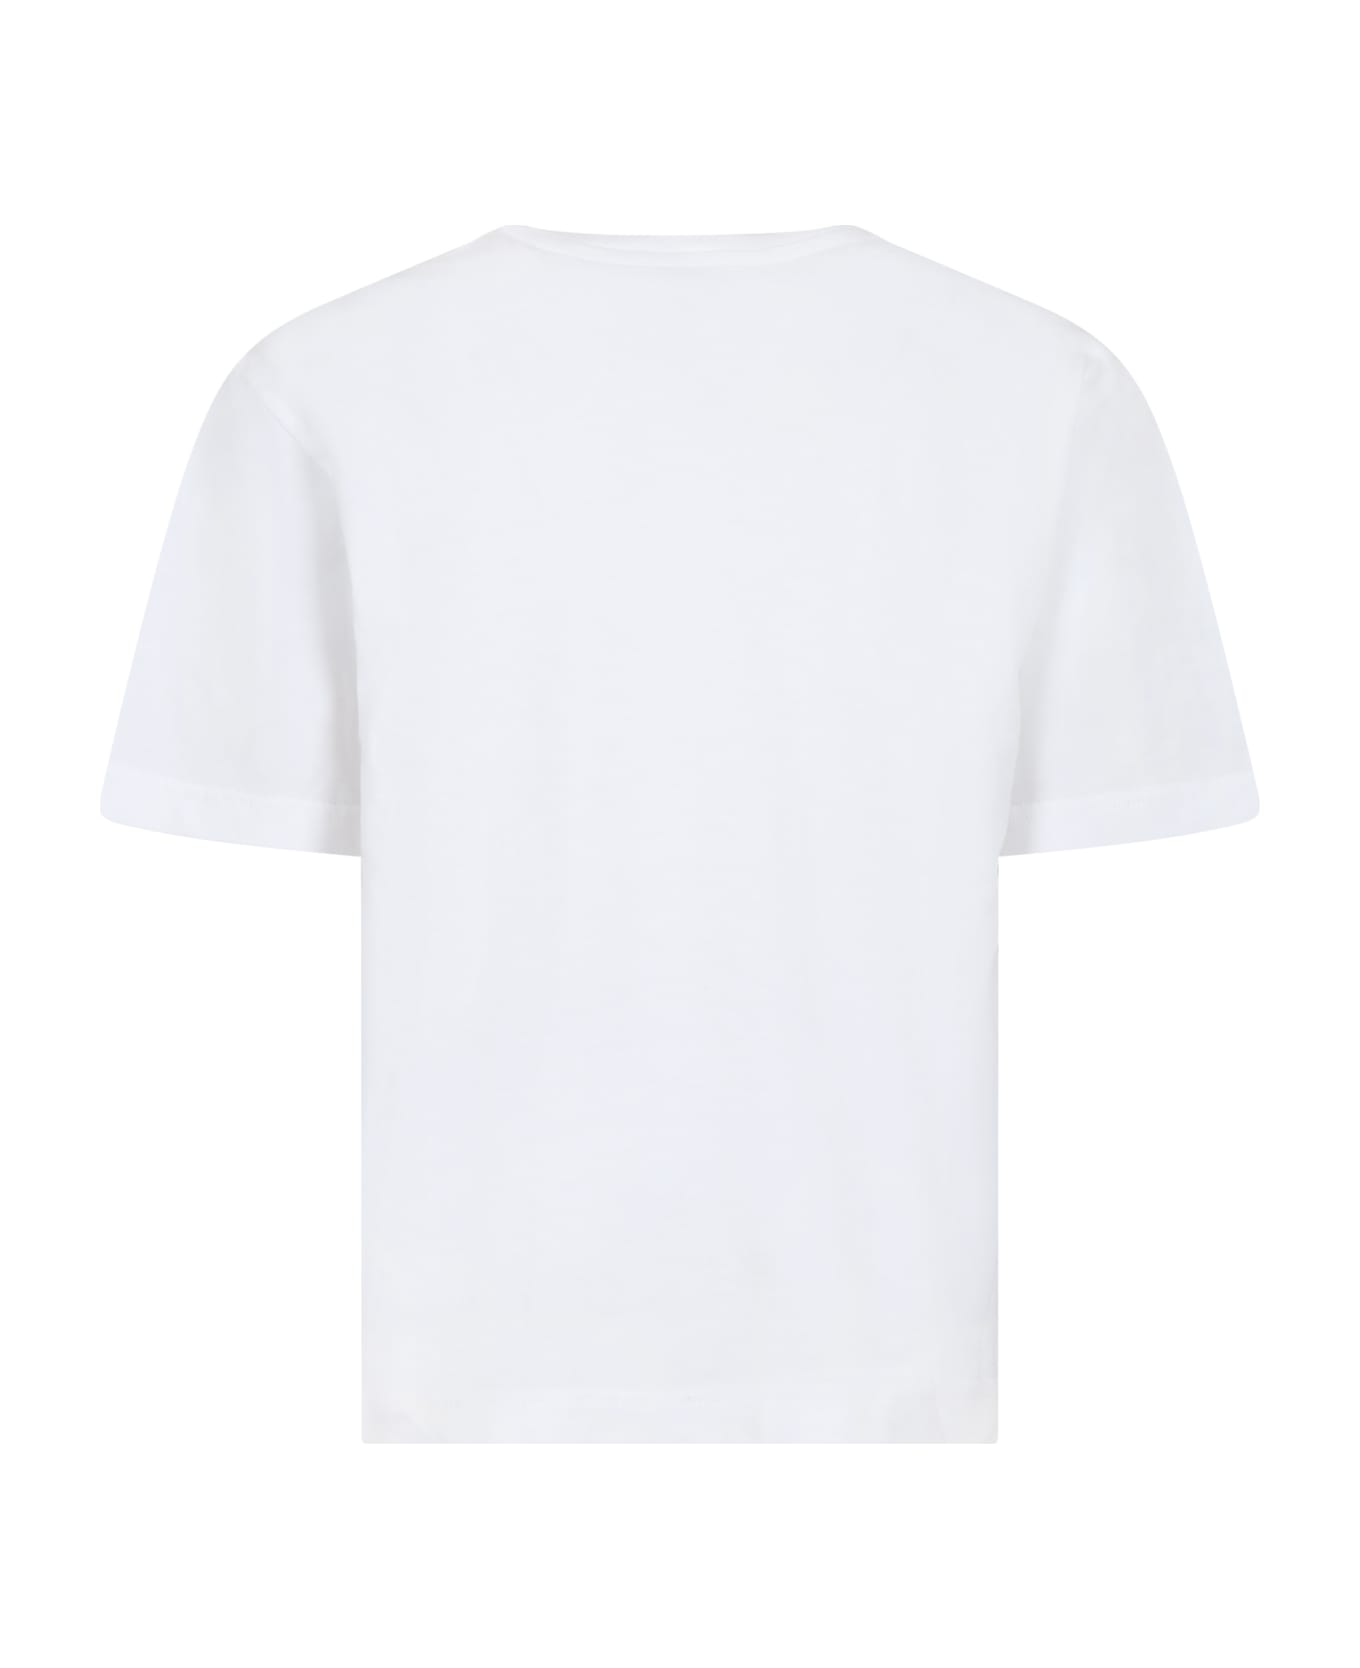 Dolce & Gabbana Whit T-shirt Shorts For Boy With Iconic Monogram